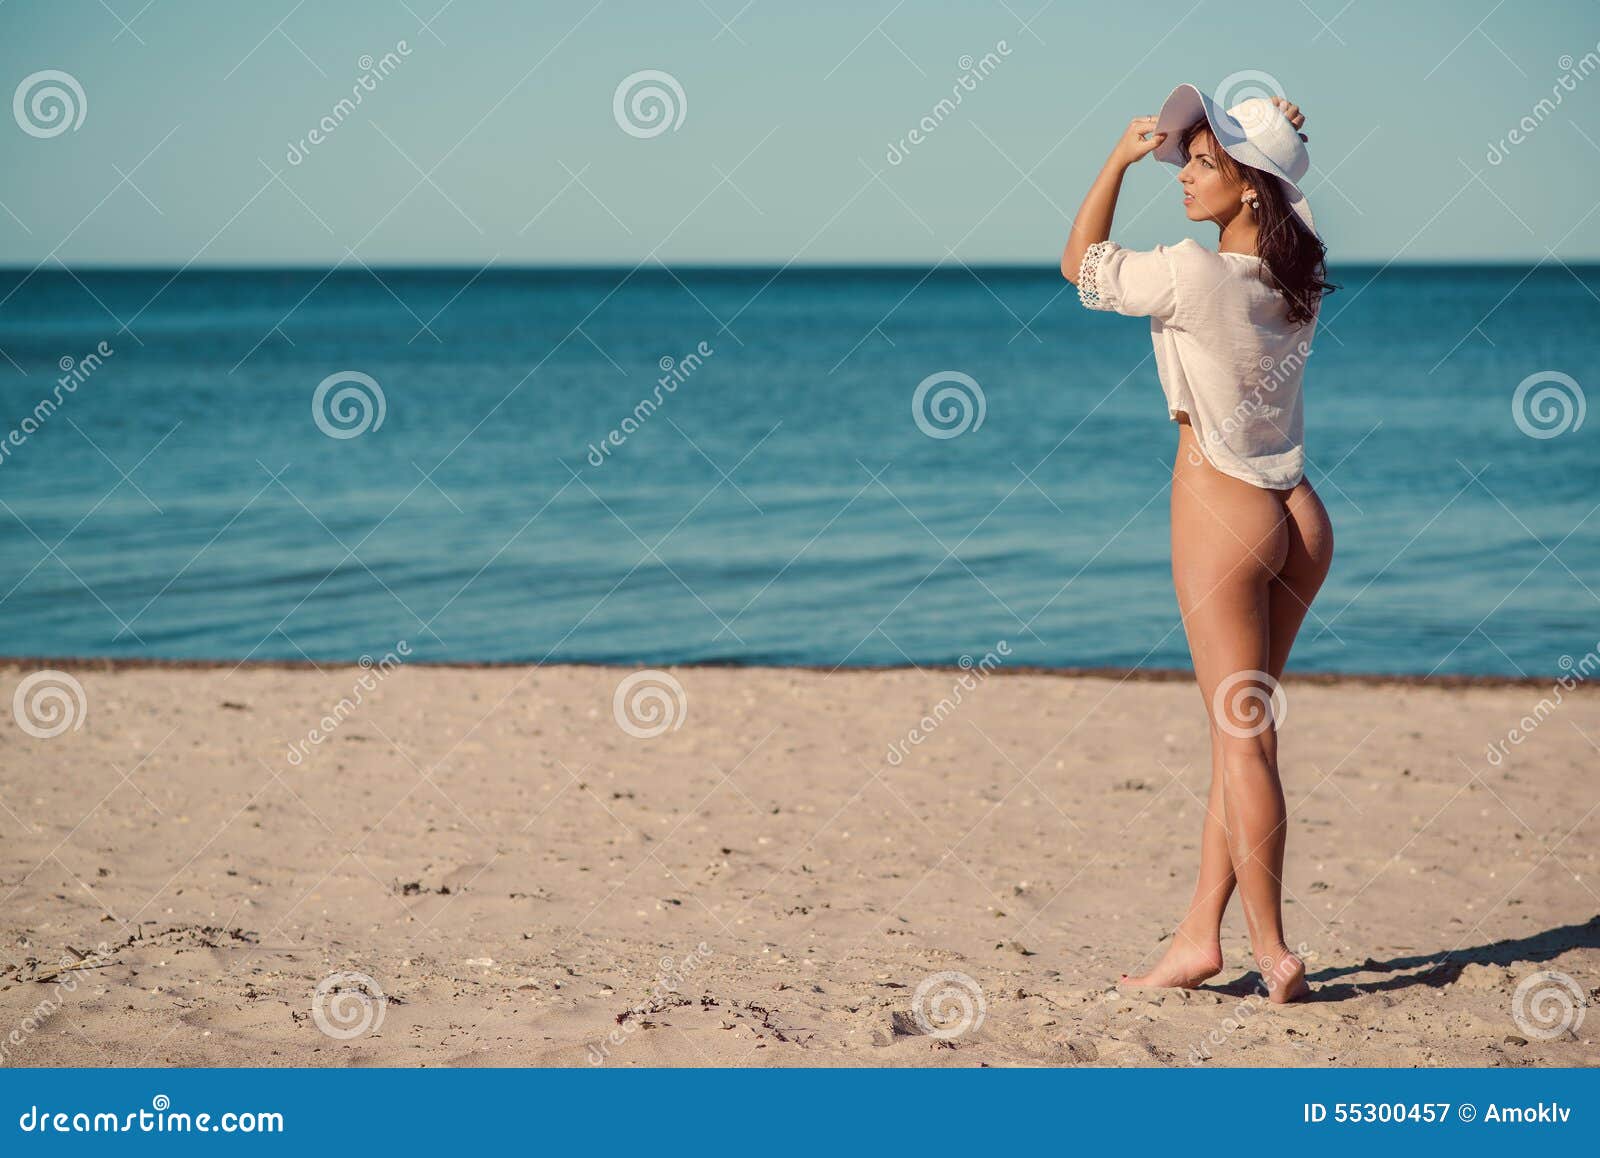 Snoppy nude beach